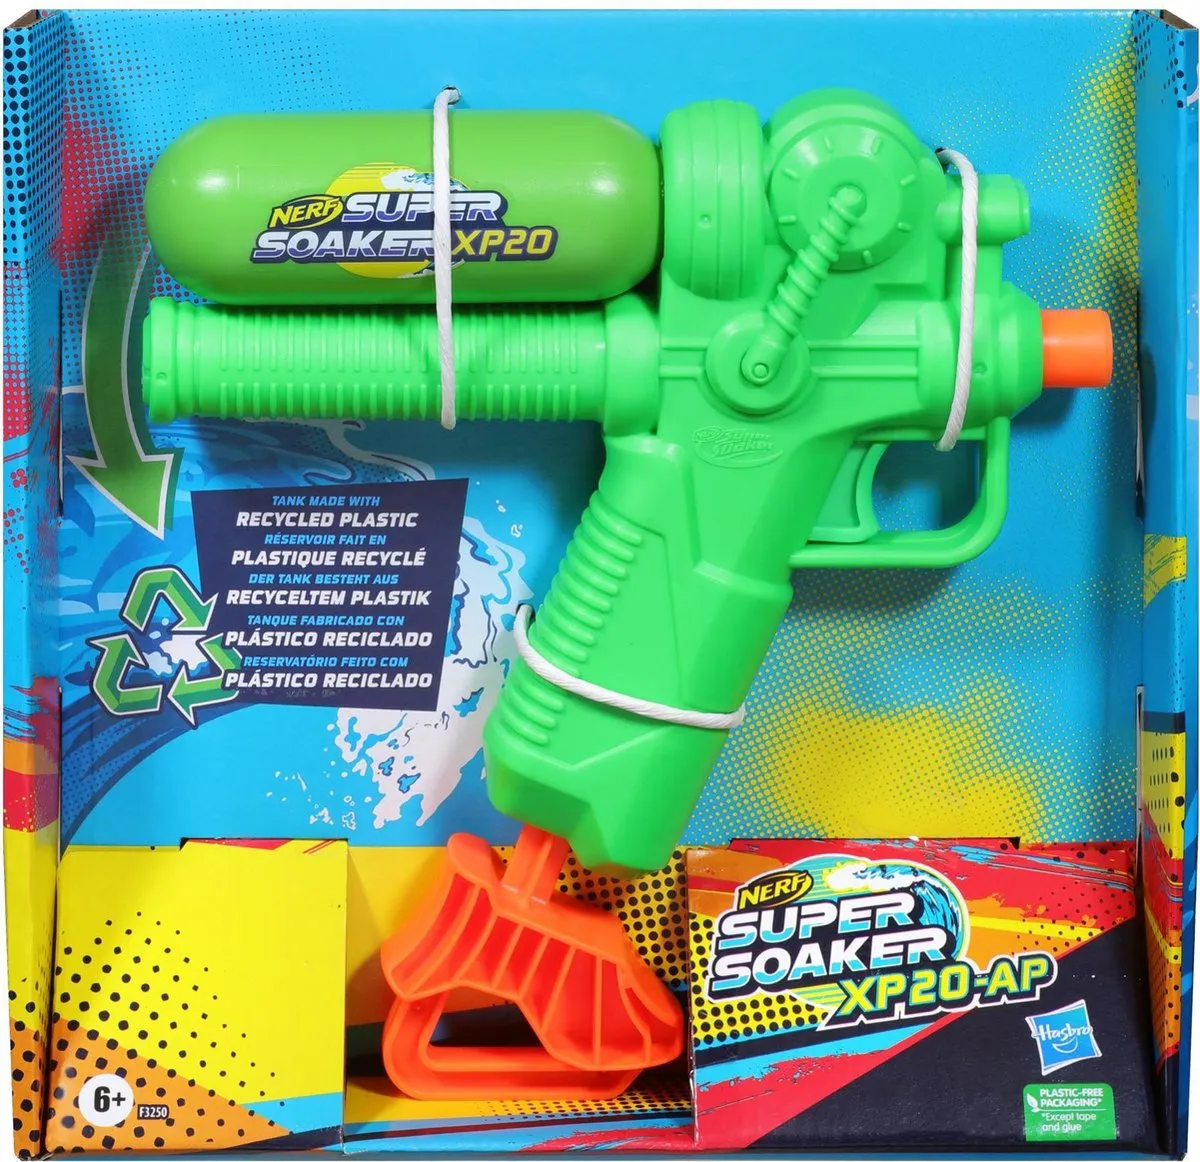 NERF Super Soaker XP20 - Het Klassieke Waterpistool! speelgoed